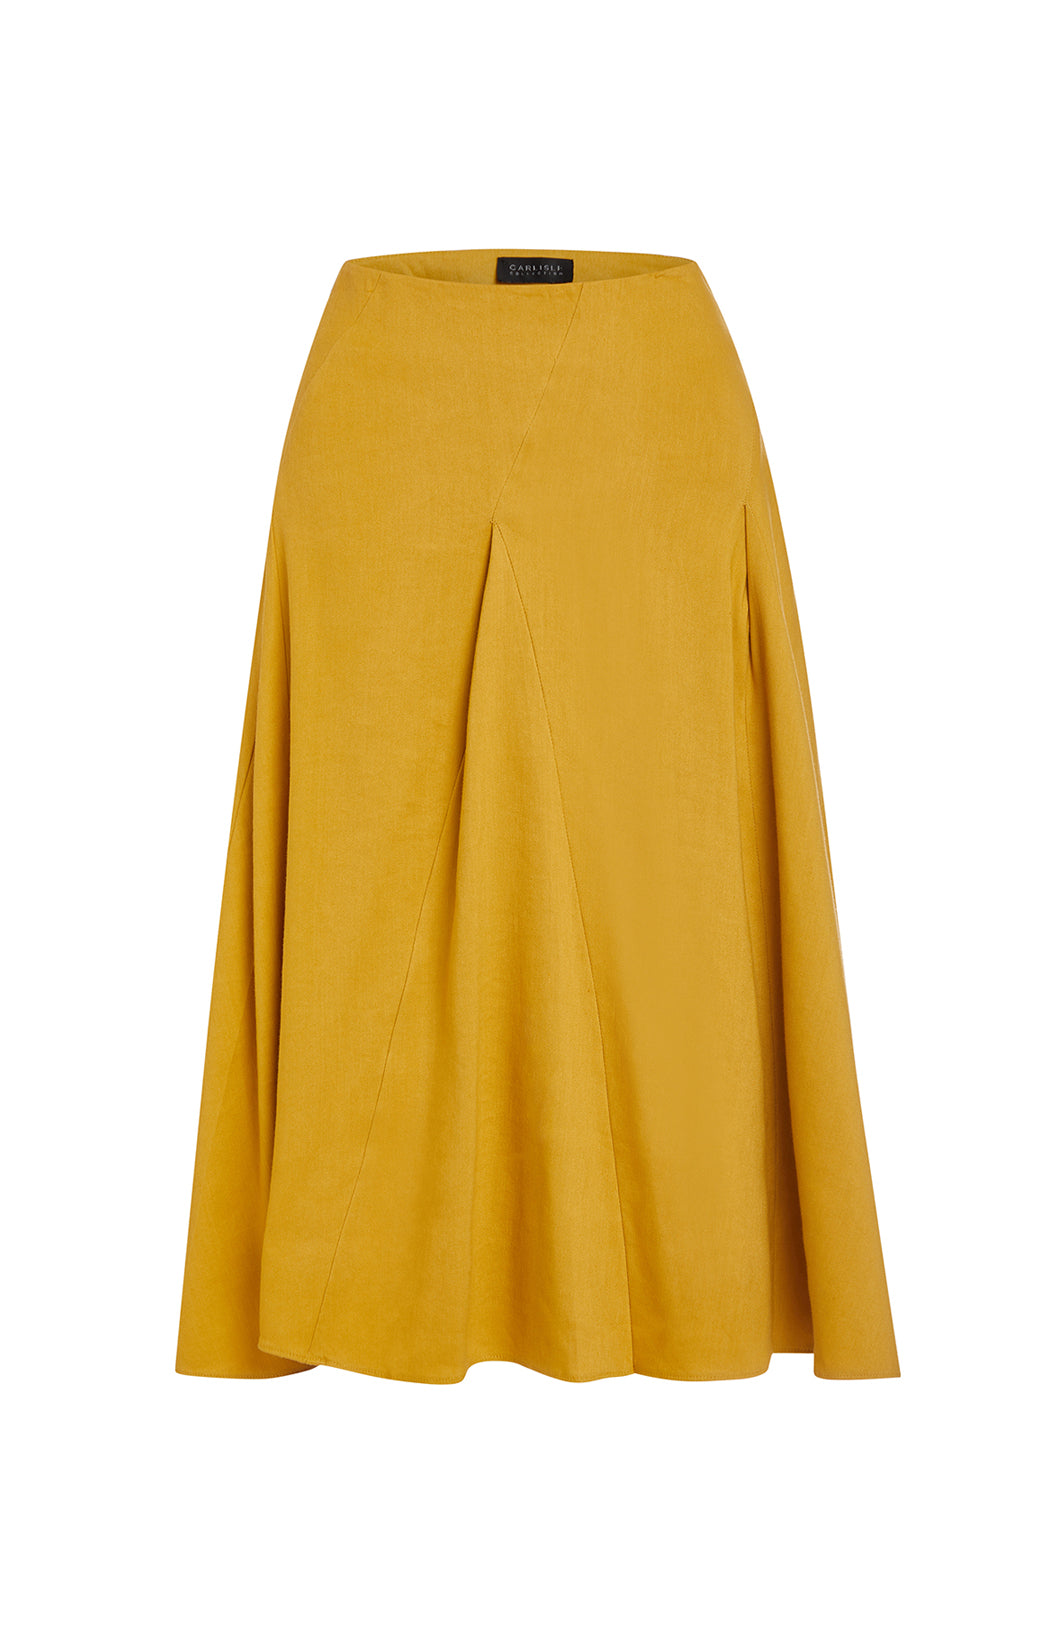 Goya - Italian Herringbone Stretch Jacquard Skirt - Product Image